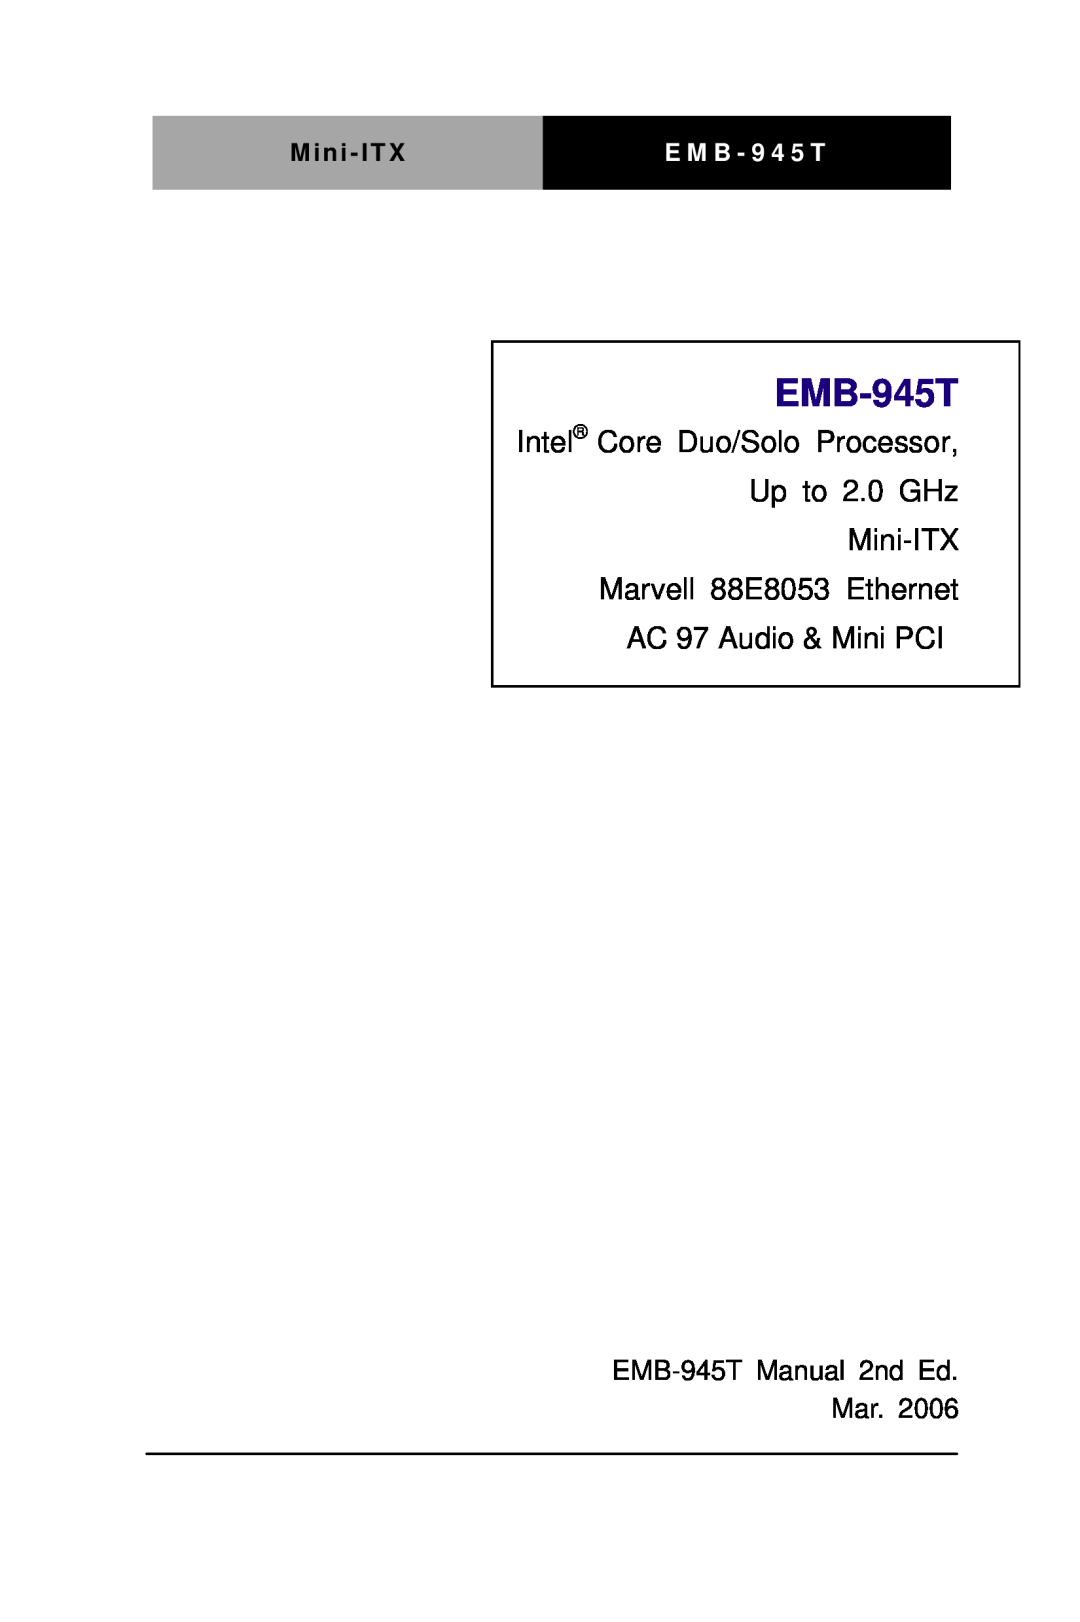 Intel EMB-945T manual Intel Core Duo/Solo Processor Up to 2.0 GHz, Mini-ITX Marvell 88E8053 Ethernet, Mini - ITX 